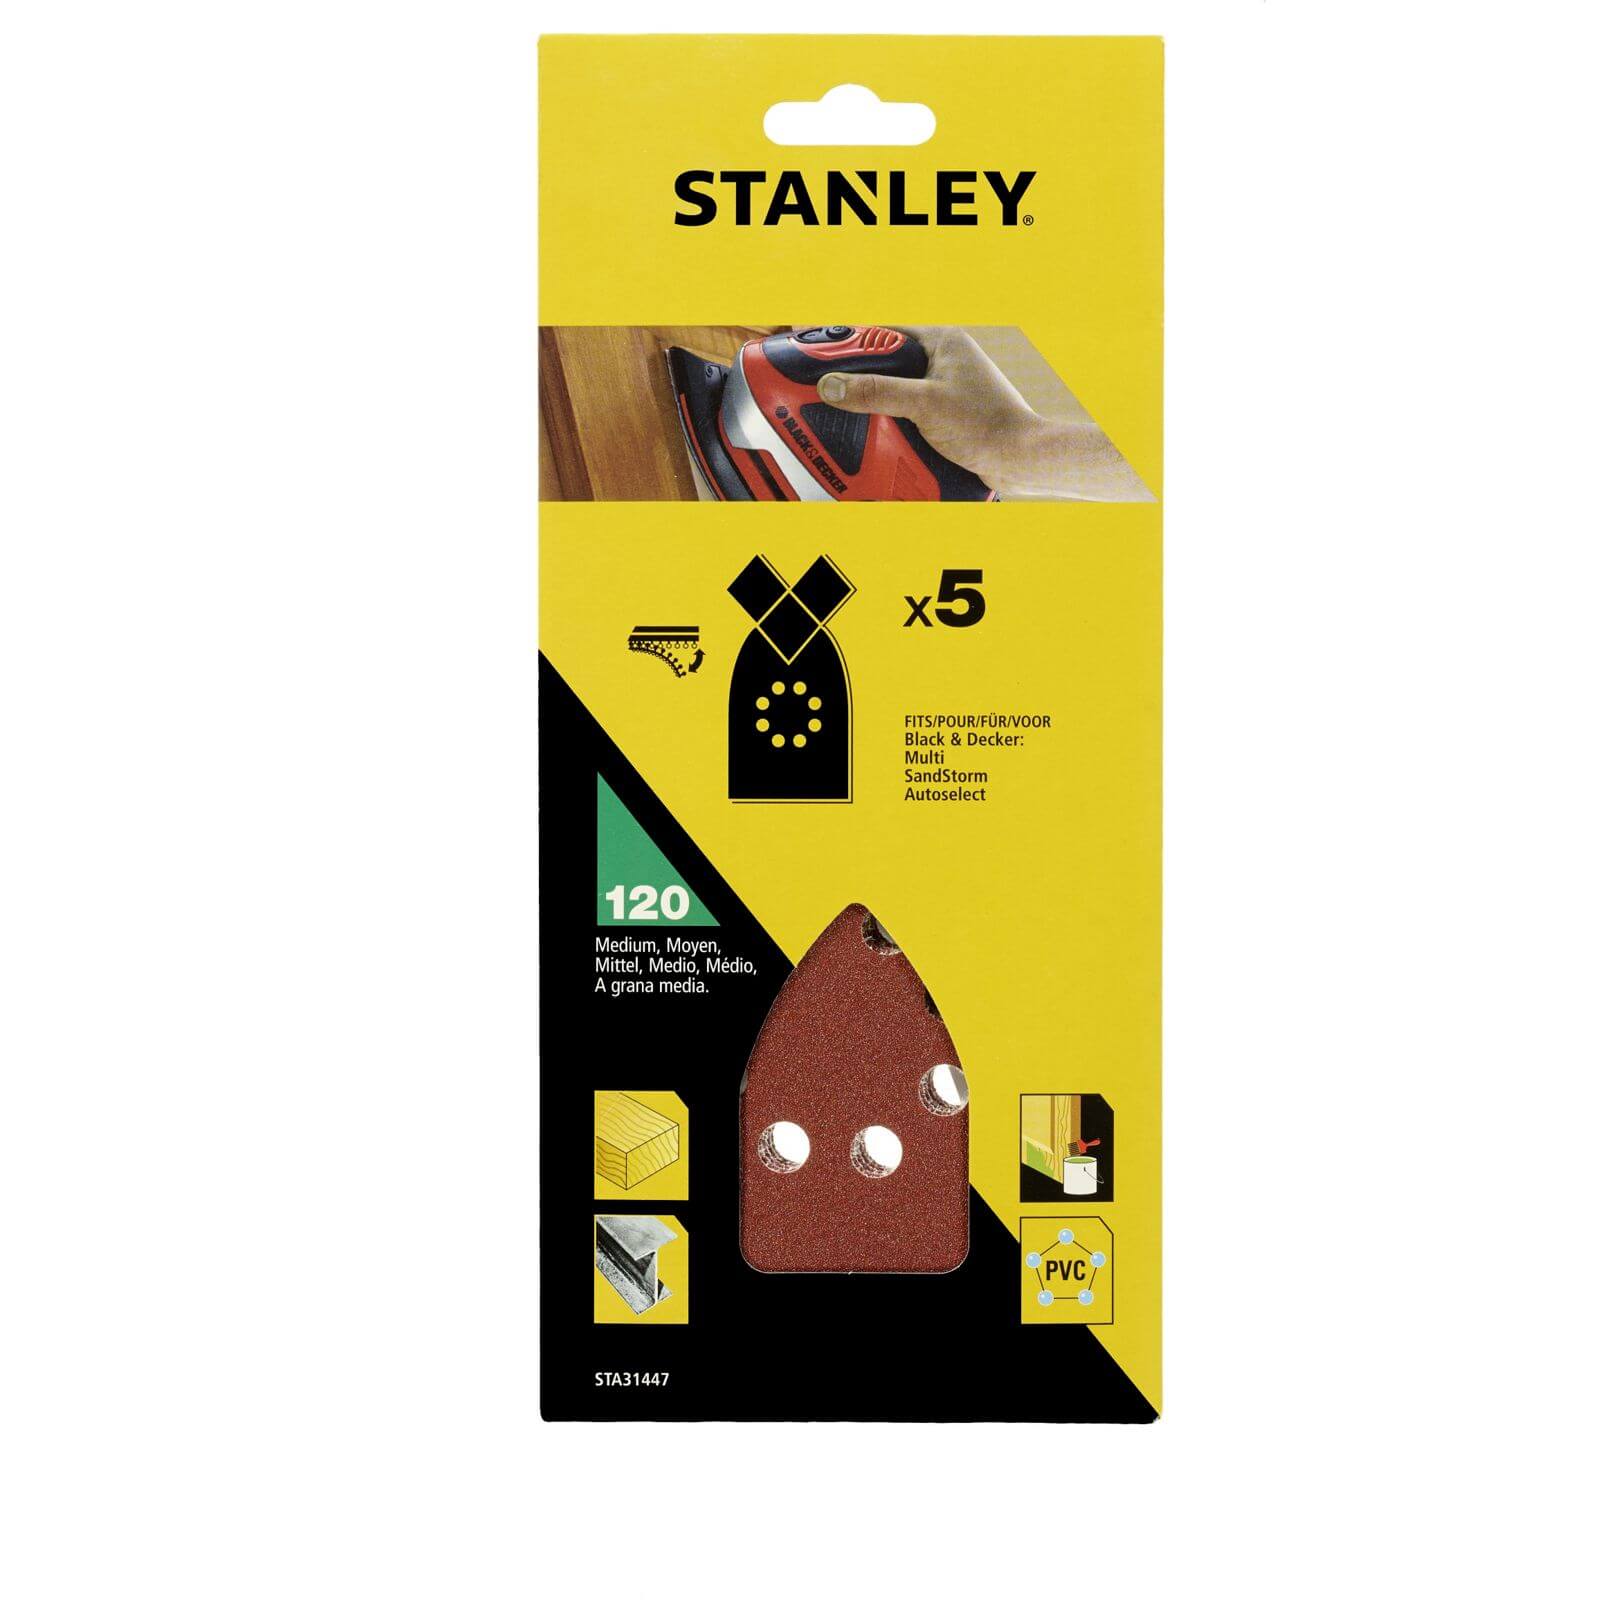 Photo of Stanley Sanding Sheets - 120g - Sta31447-xj